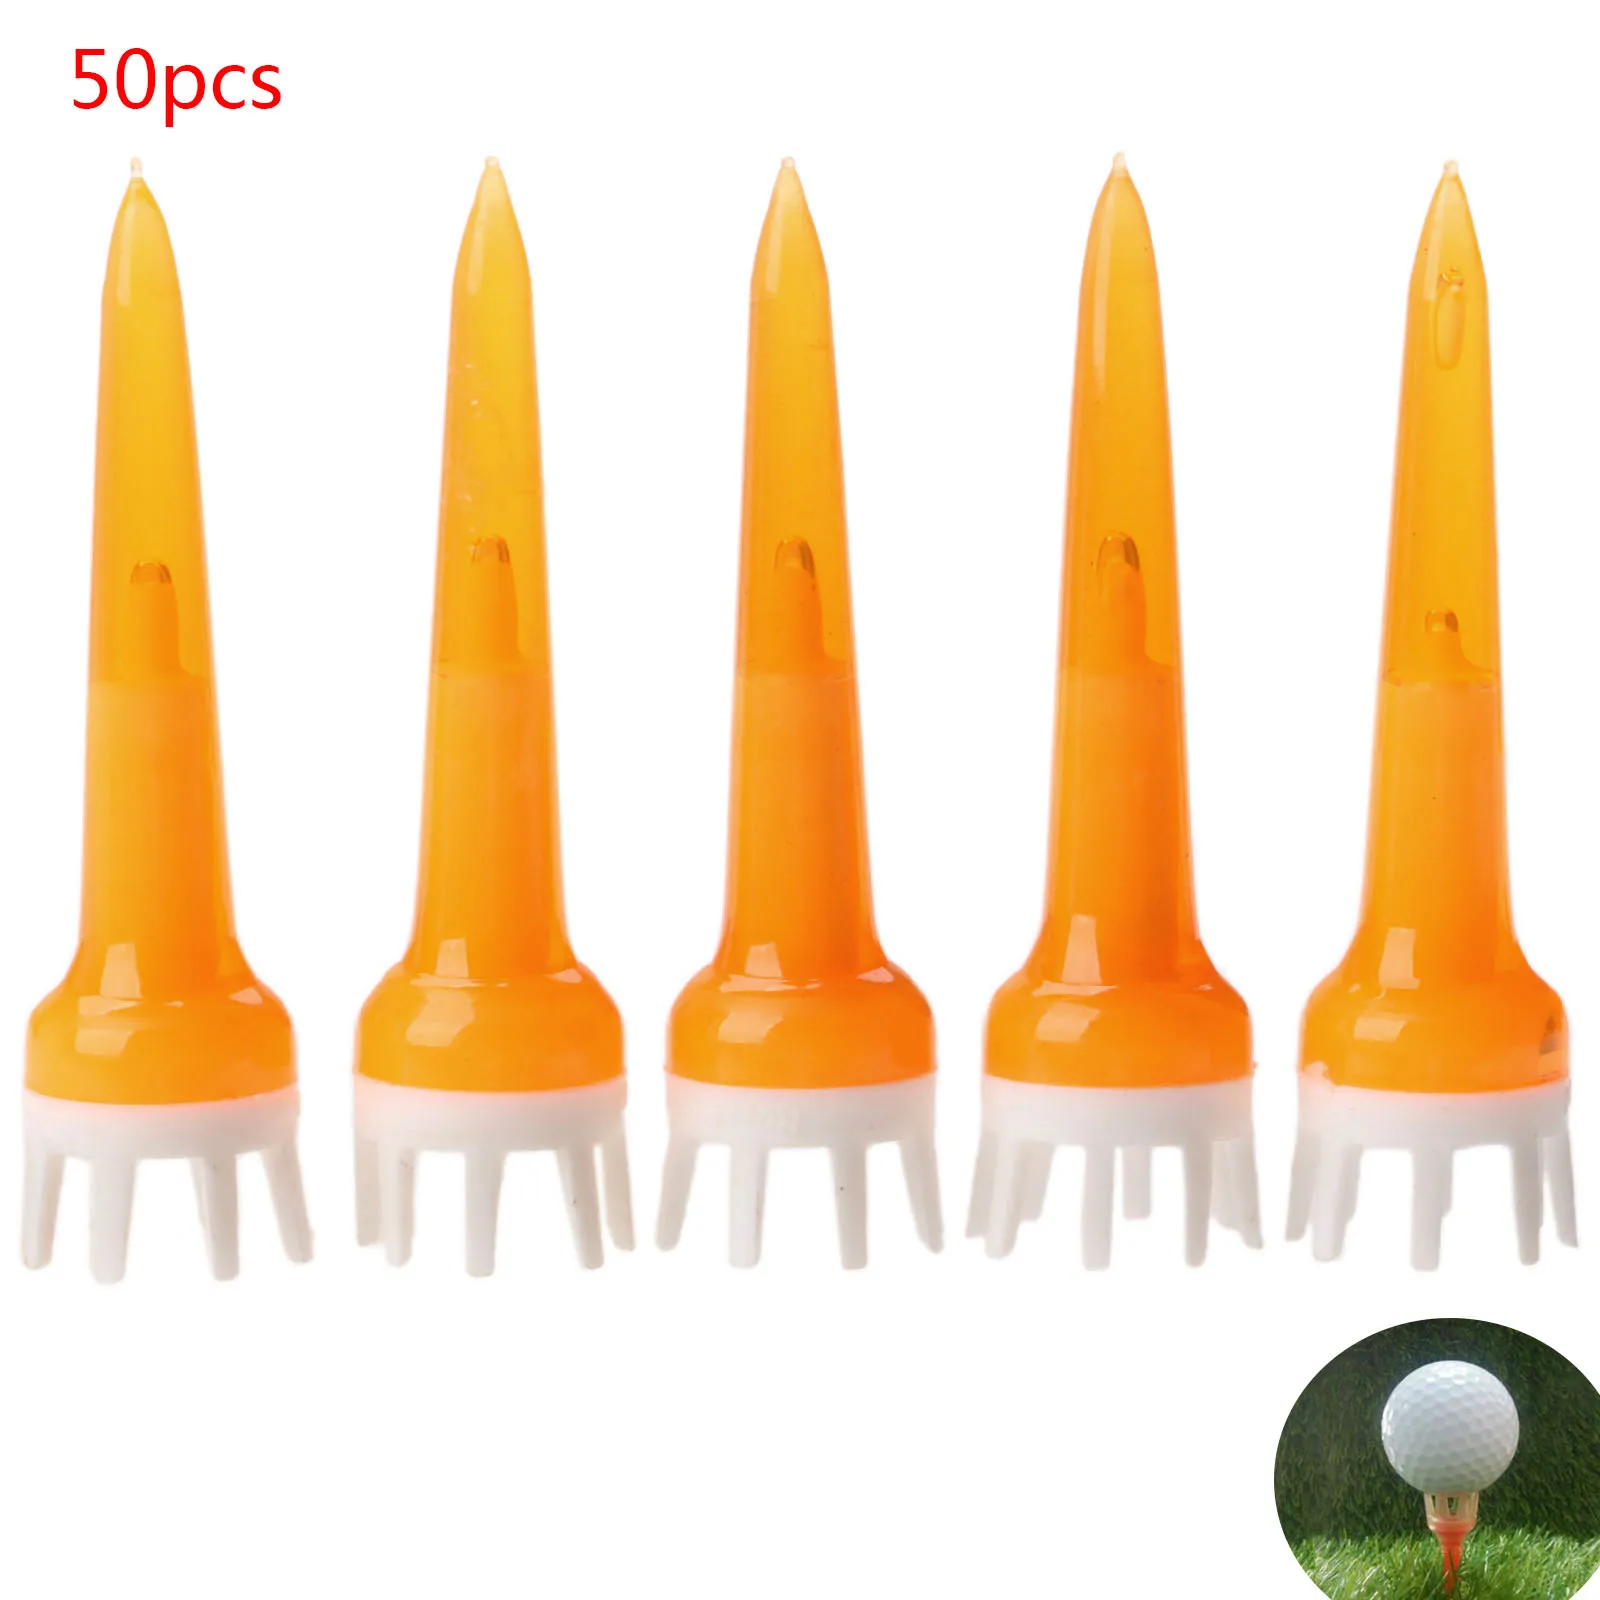 

50 Pcs Plastic Orange Golf Tee Crown Shape Booster Tees 50mm Friction Reduce Tee Golf Training Accessries Random Colors